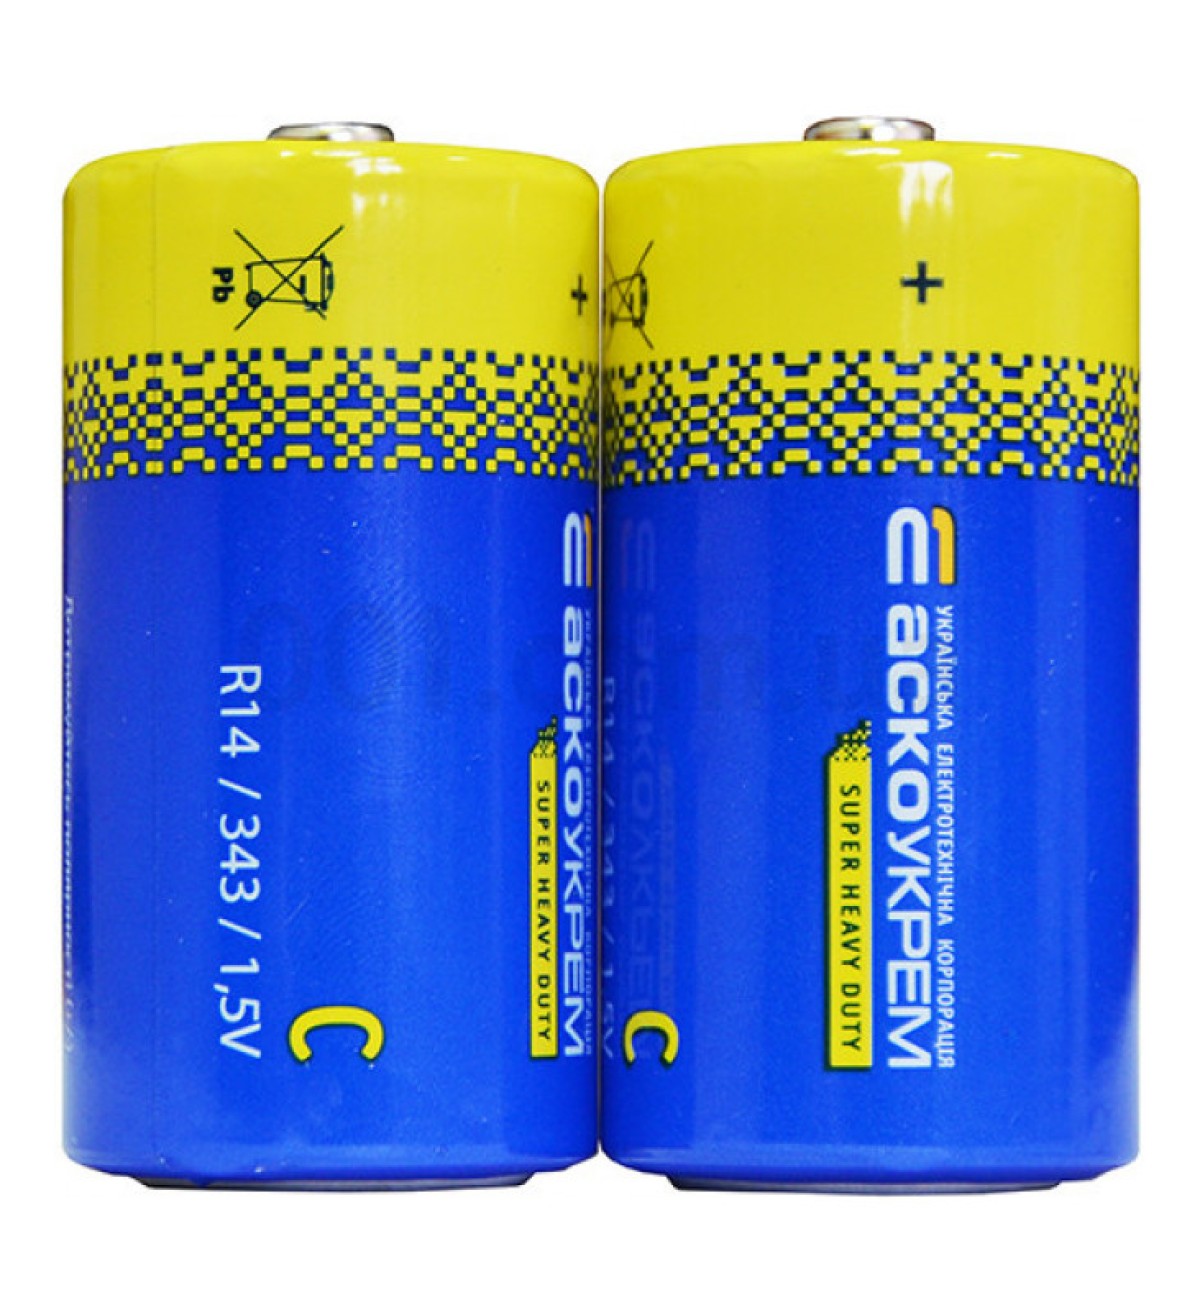 Батарейка сольова С.R14.SP2, типорозмір C упаковка shrink 2 шт., АСКО-УКРЕМ 256_280.jpg